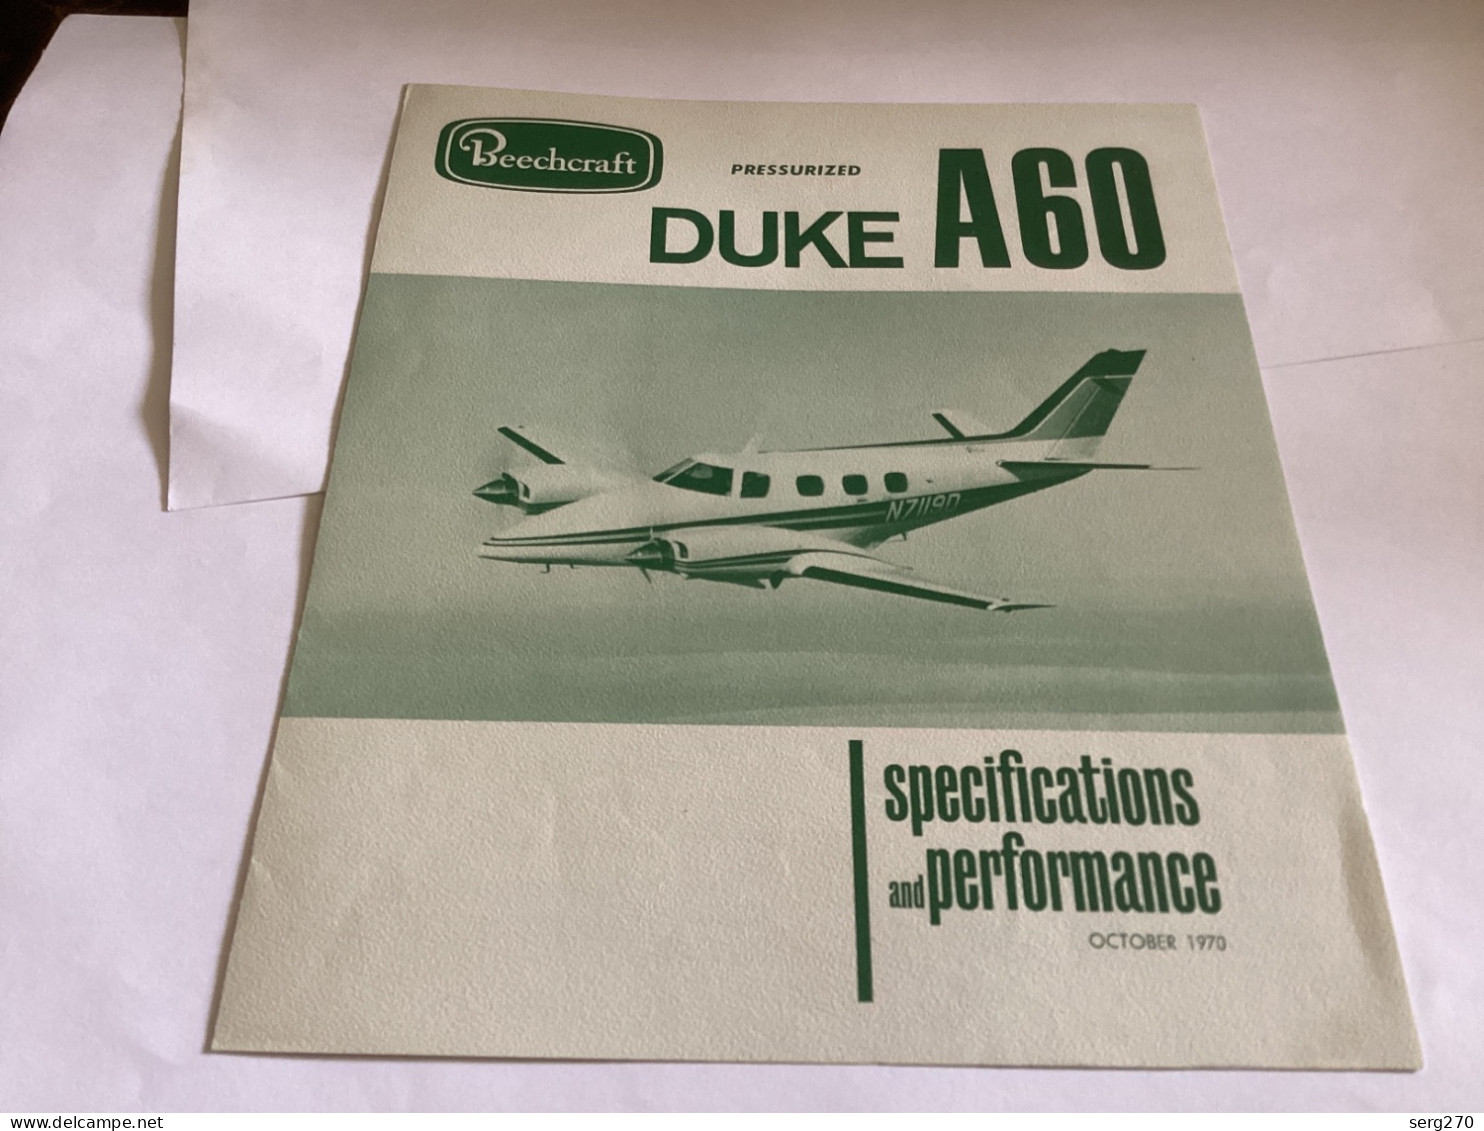 Avion Aviation Beecheraft PRESSURIZIO DUKE AGI 1970 Specifications And Performance OCTOBER 1970 - Transports